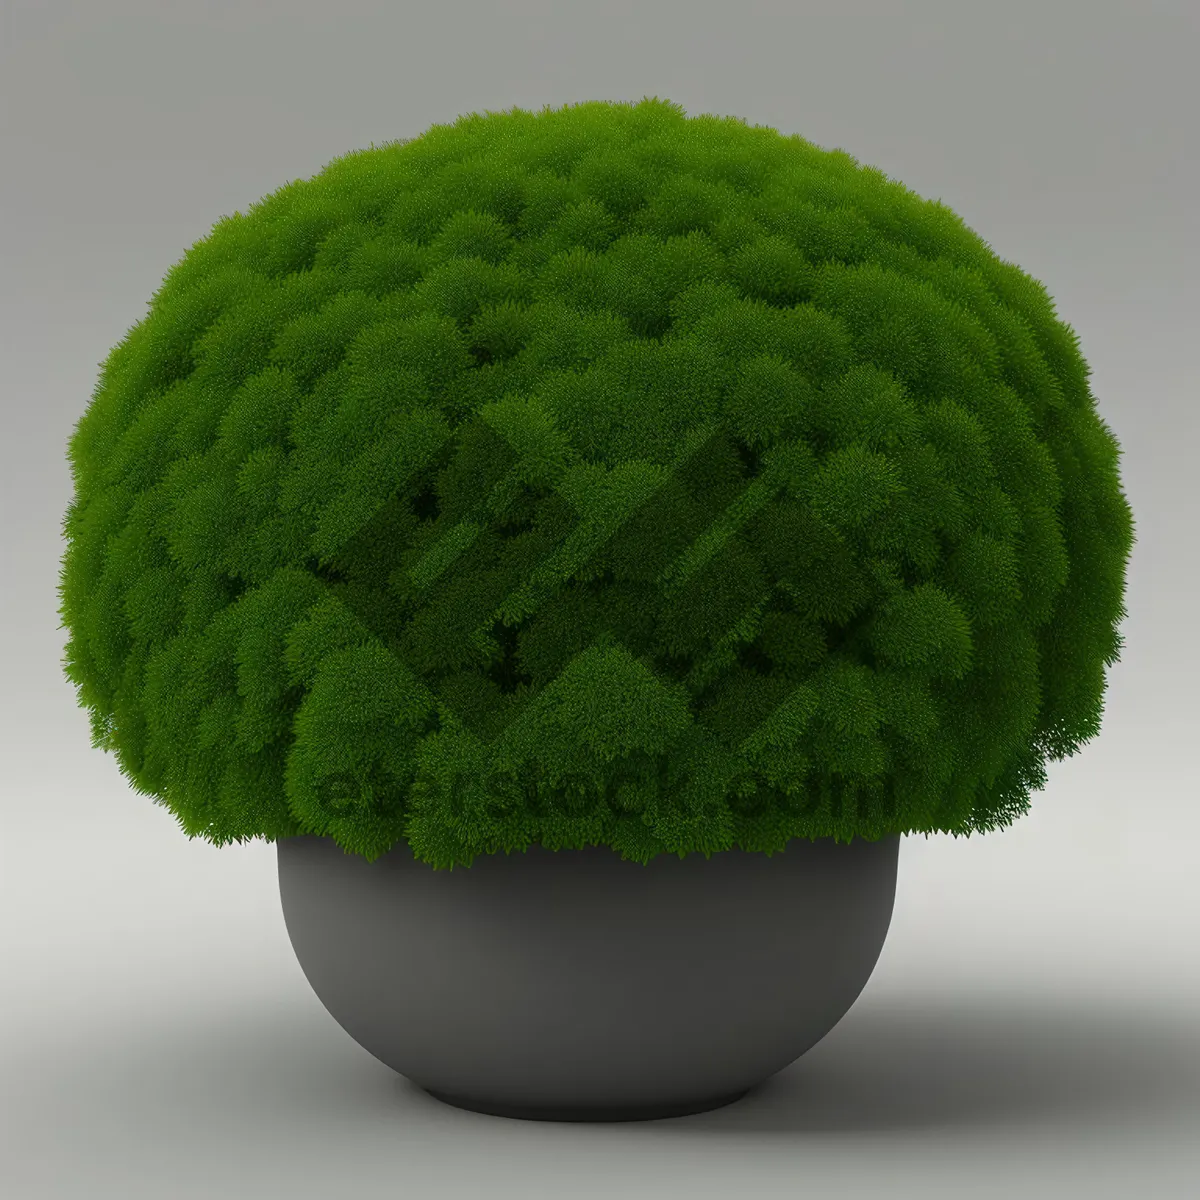 Picture of Fresh Organic Broccoli - Nature's Healthy Green Delight